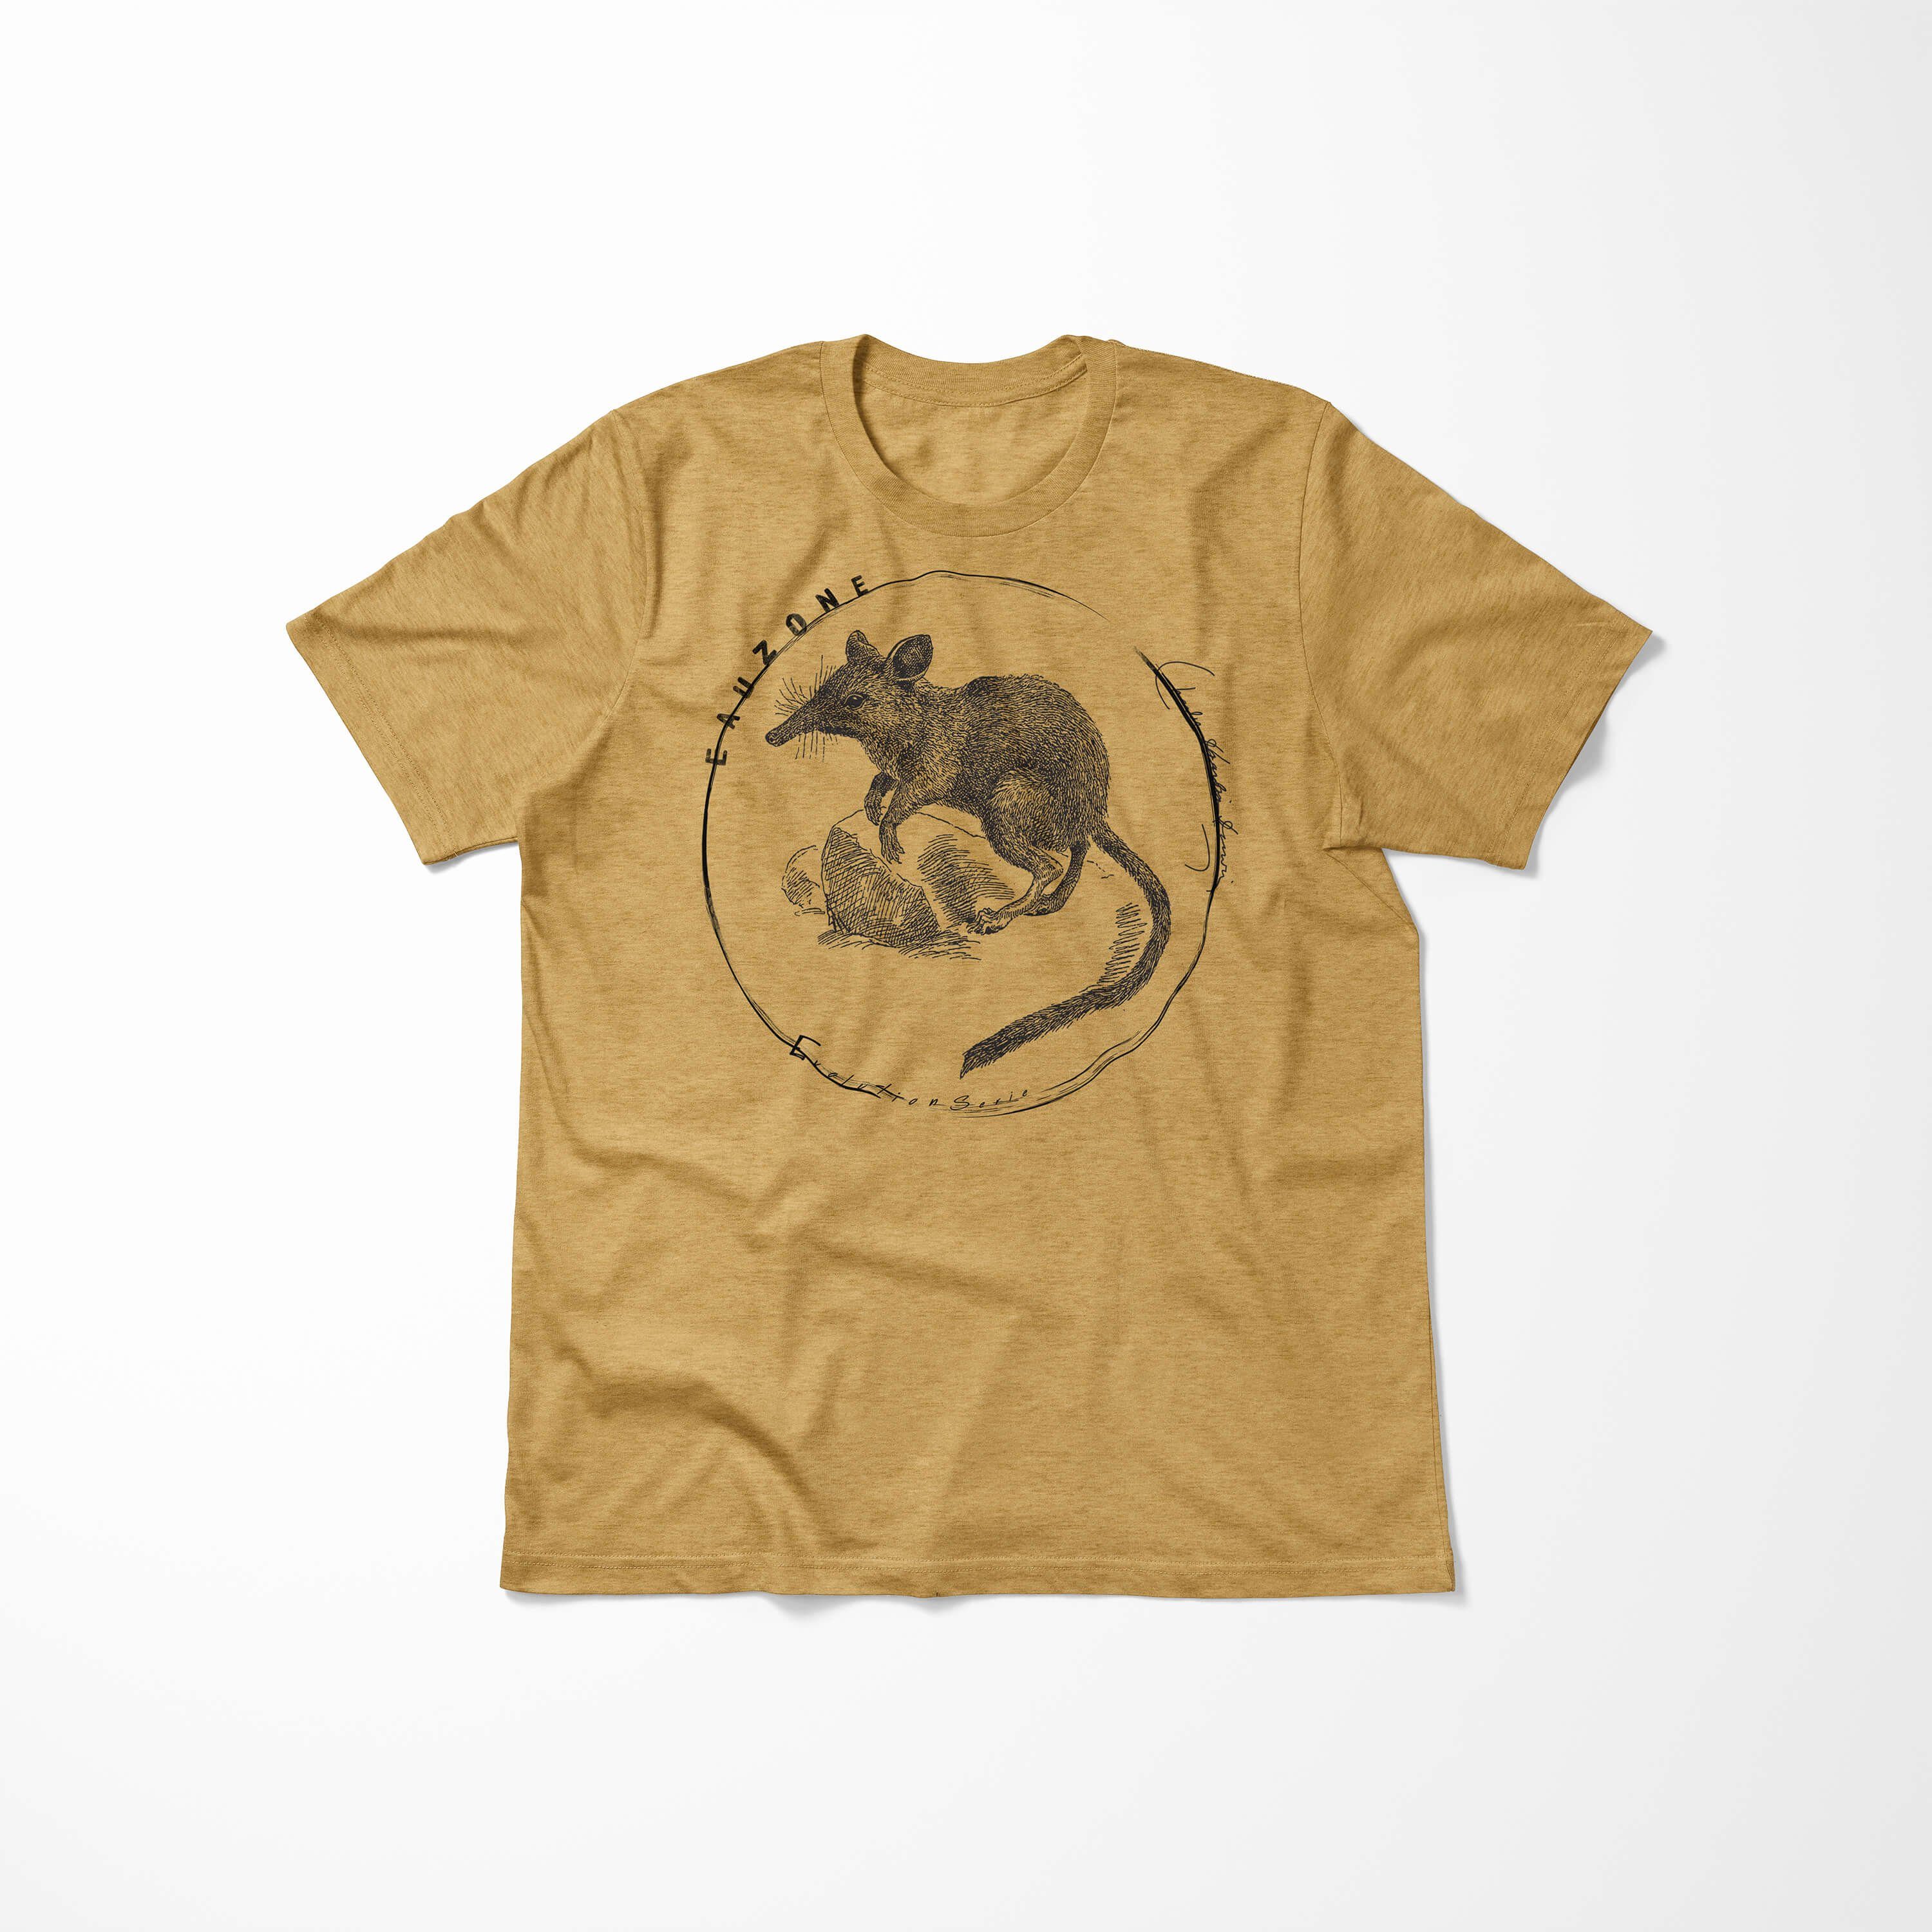 Herren Gold Art Antique Sinus Evolution T-Shirt Springspitzmaus T-Shirt